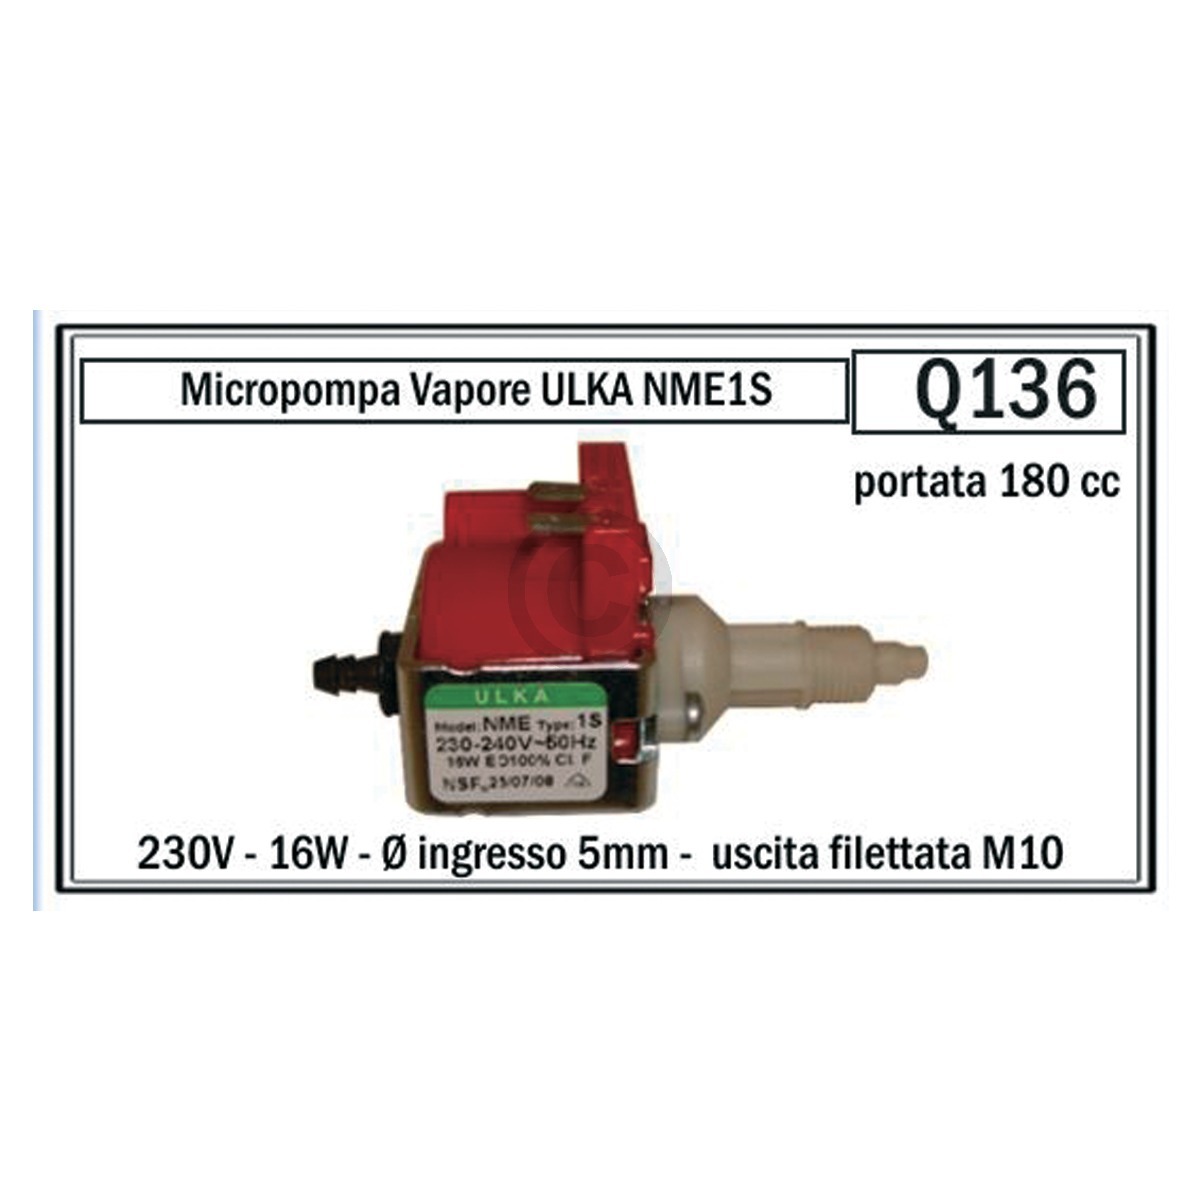 Pumpe Ulka NME1S 16W 230V Universal Alternative u.a. für Kaffeemaschine